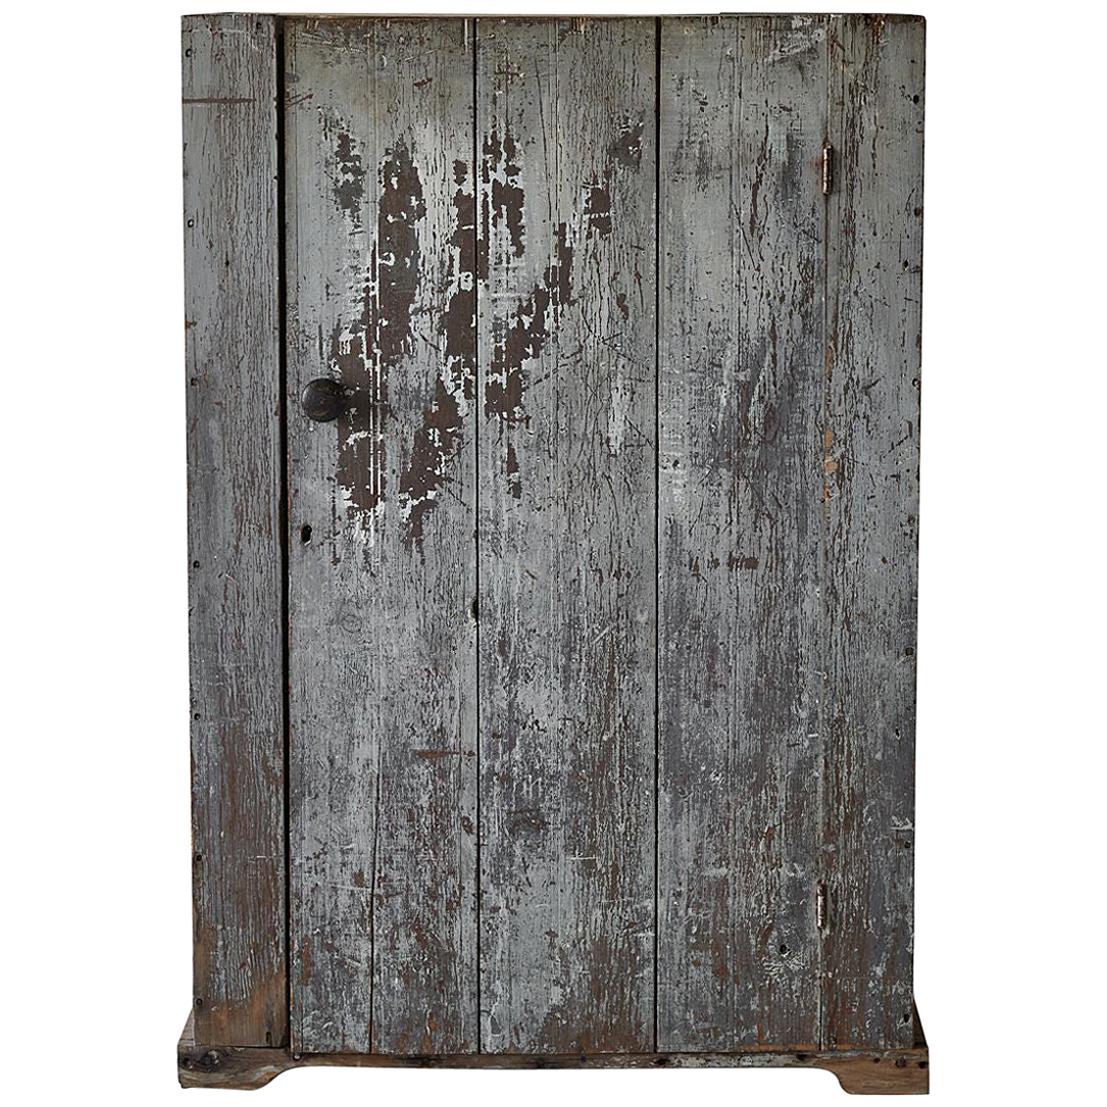 Early American Rustic Single Door Cabinet